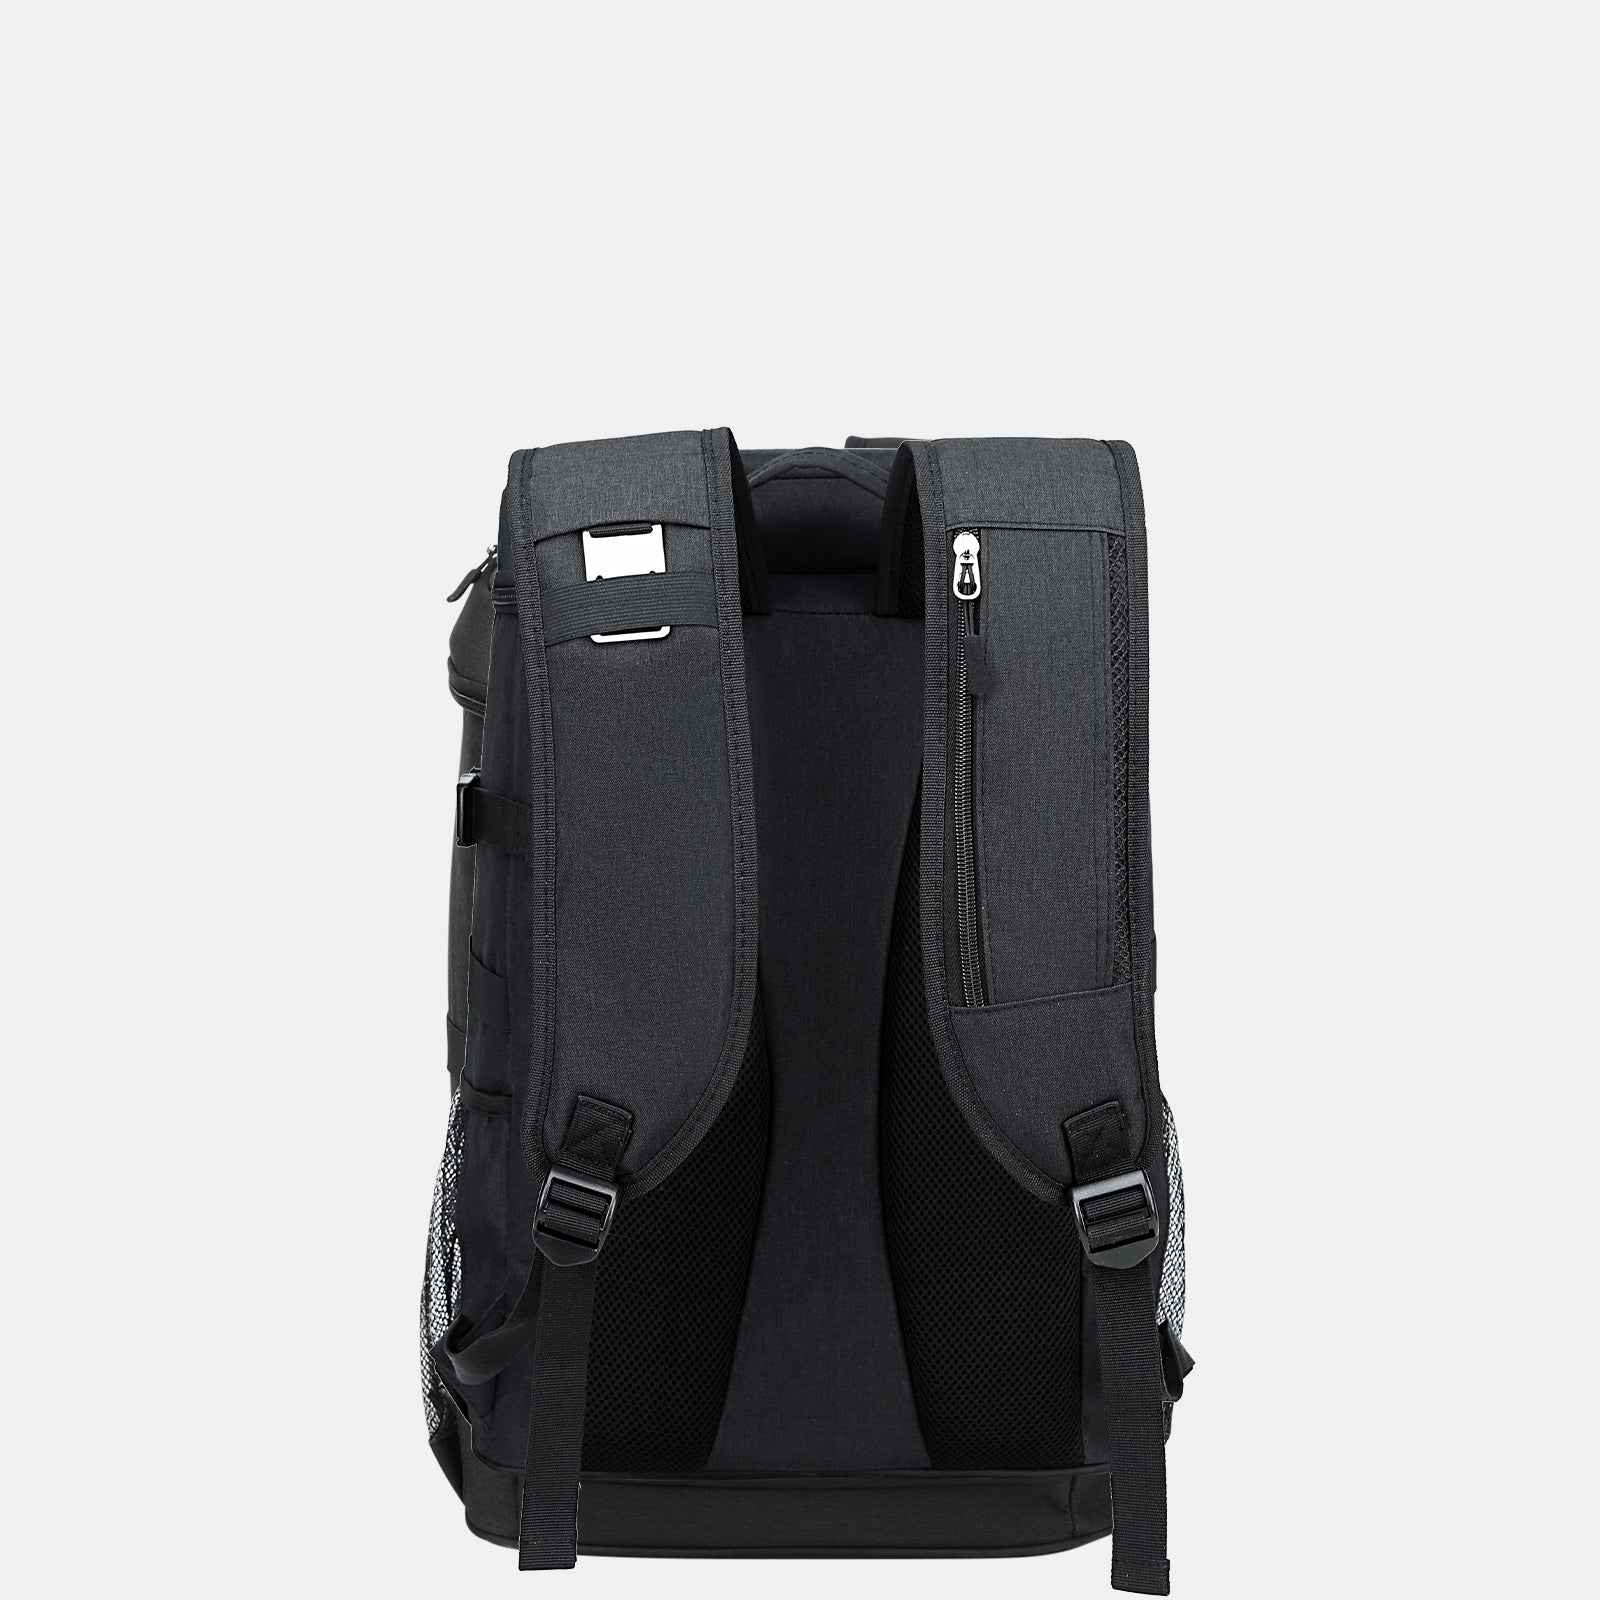 Estarer Insulated Picnic Cooler Traveling Backpack 32L with Bottle Opener